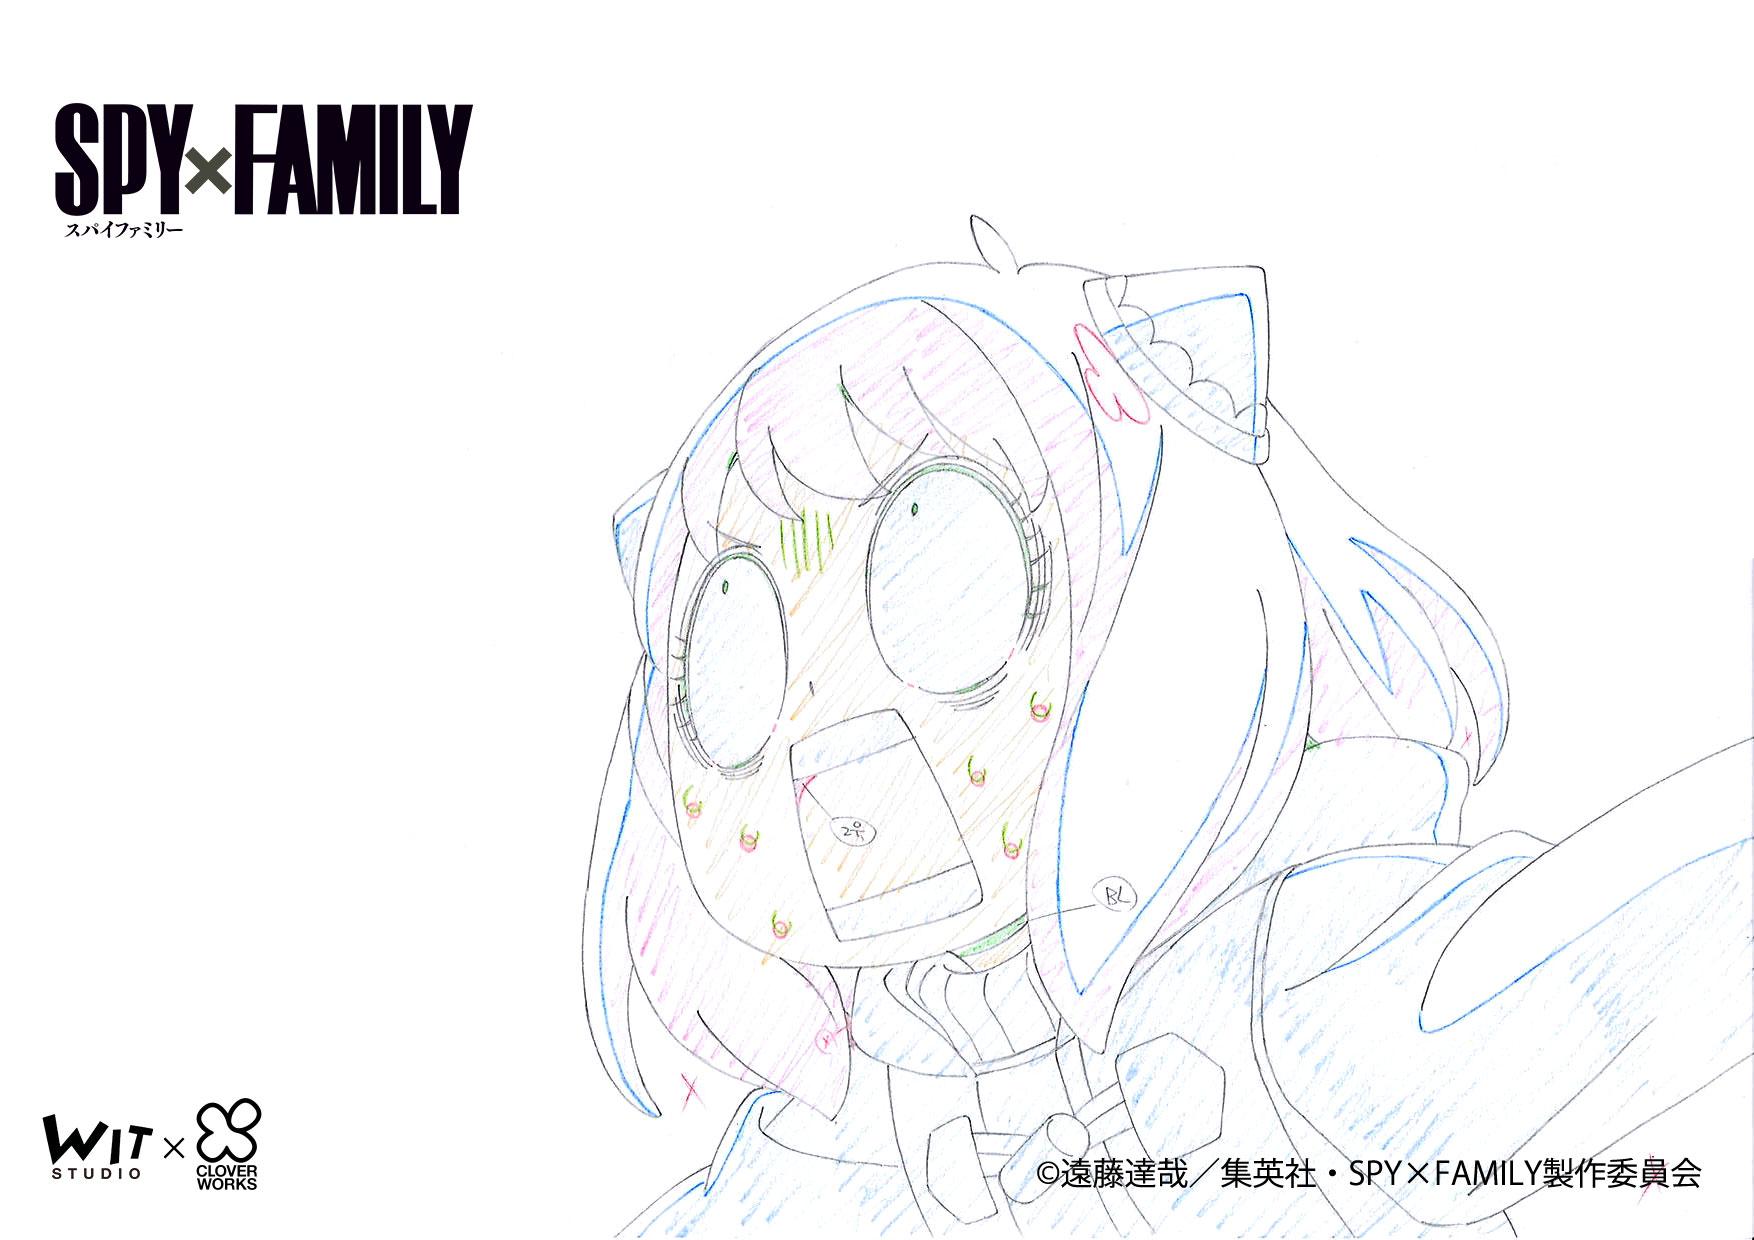 ▷ SPY x FAMILY Manga has more than 8 million copies in